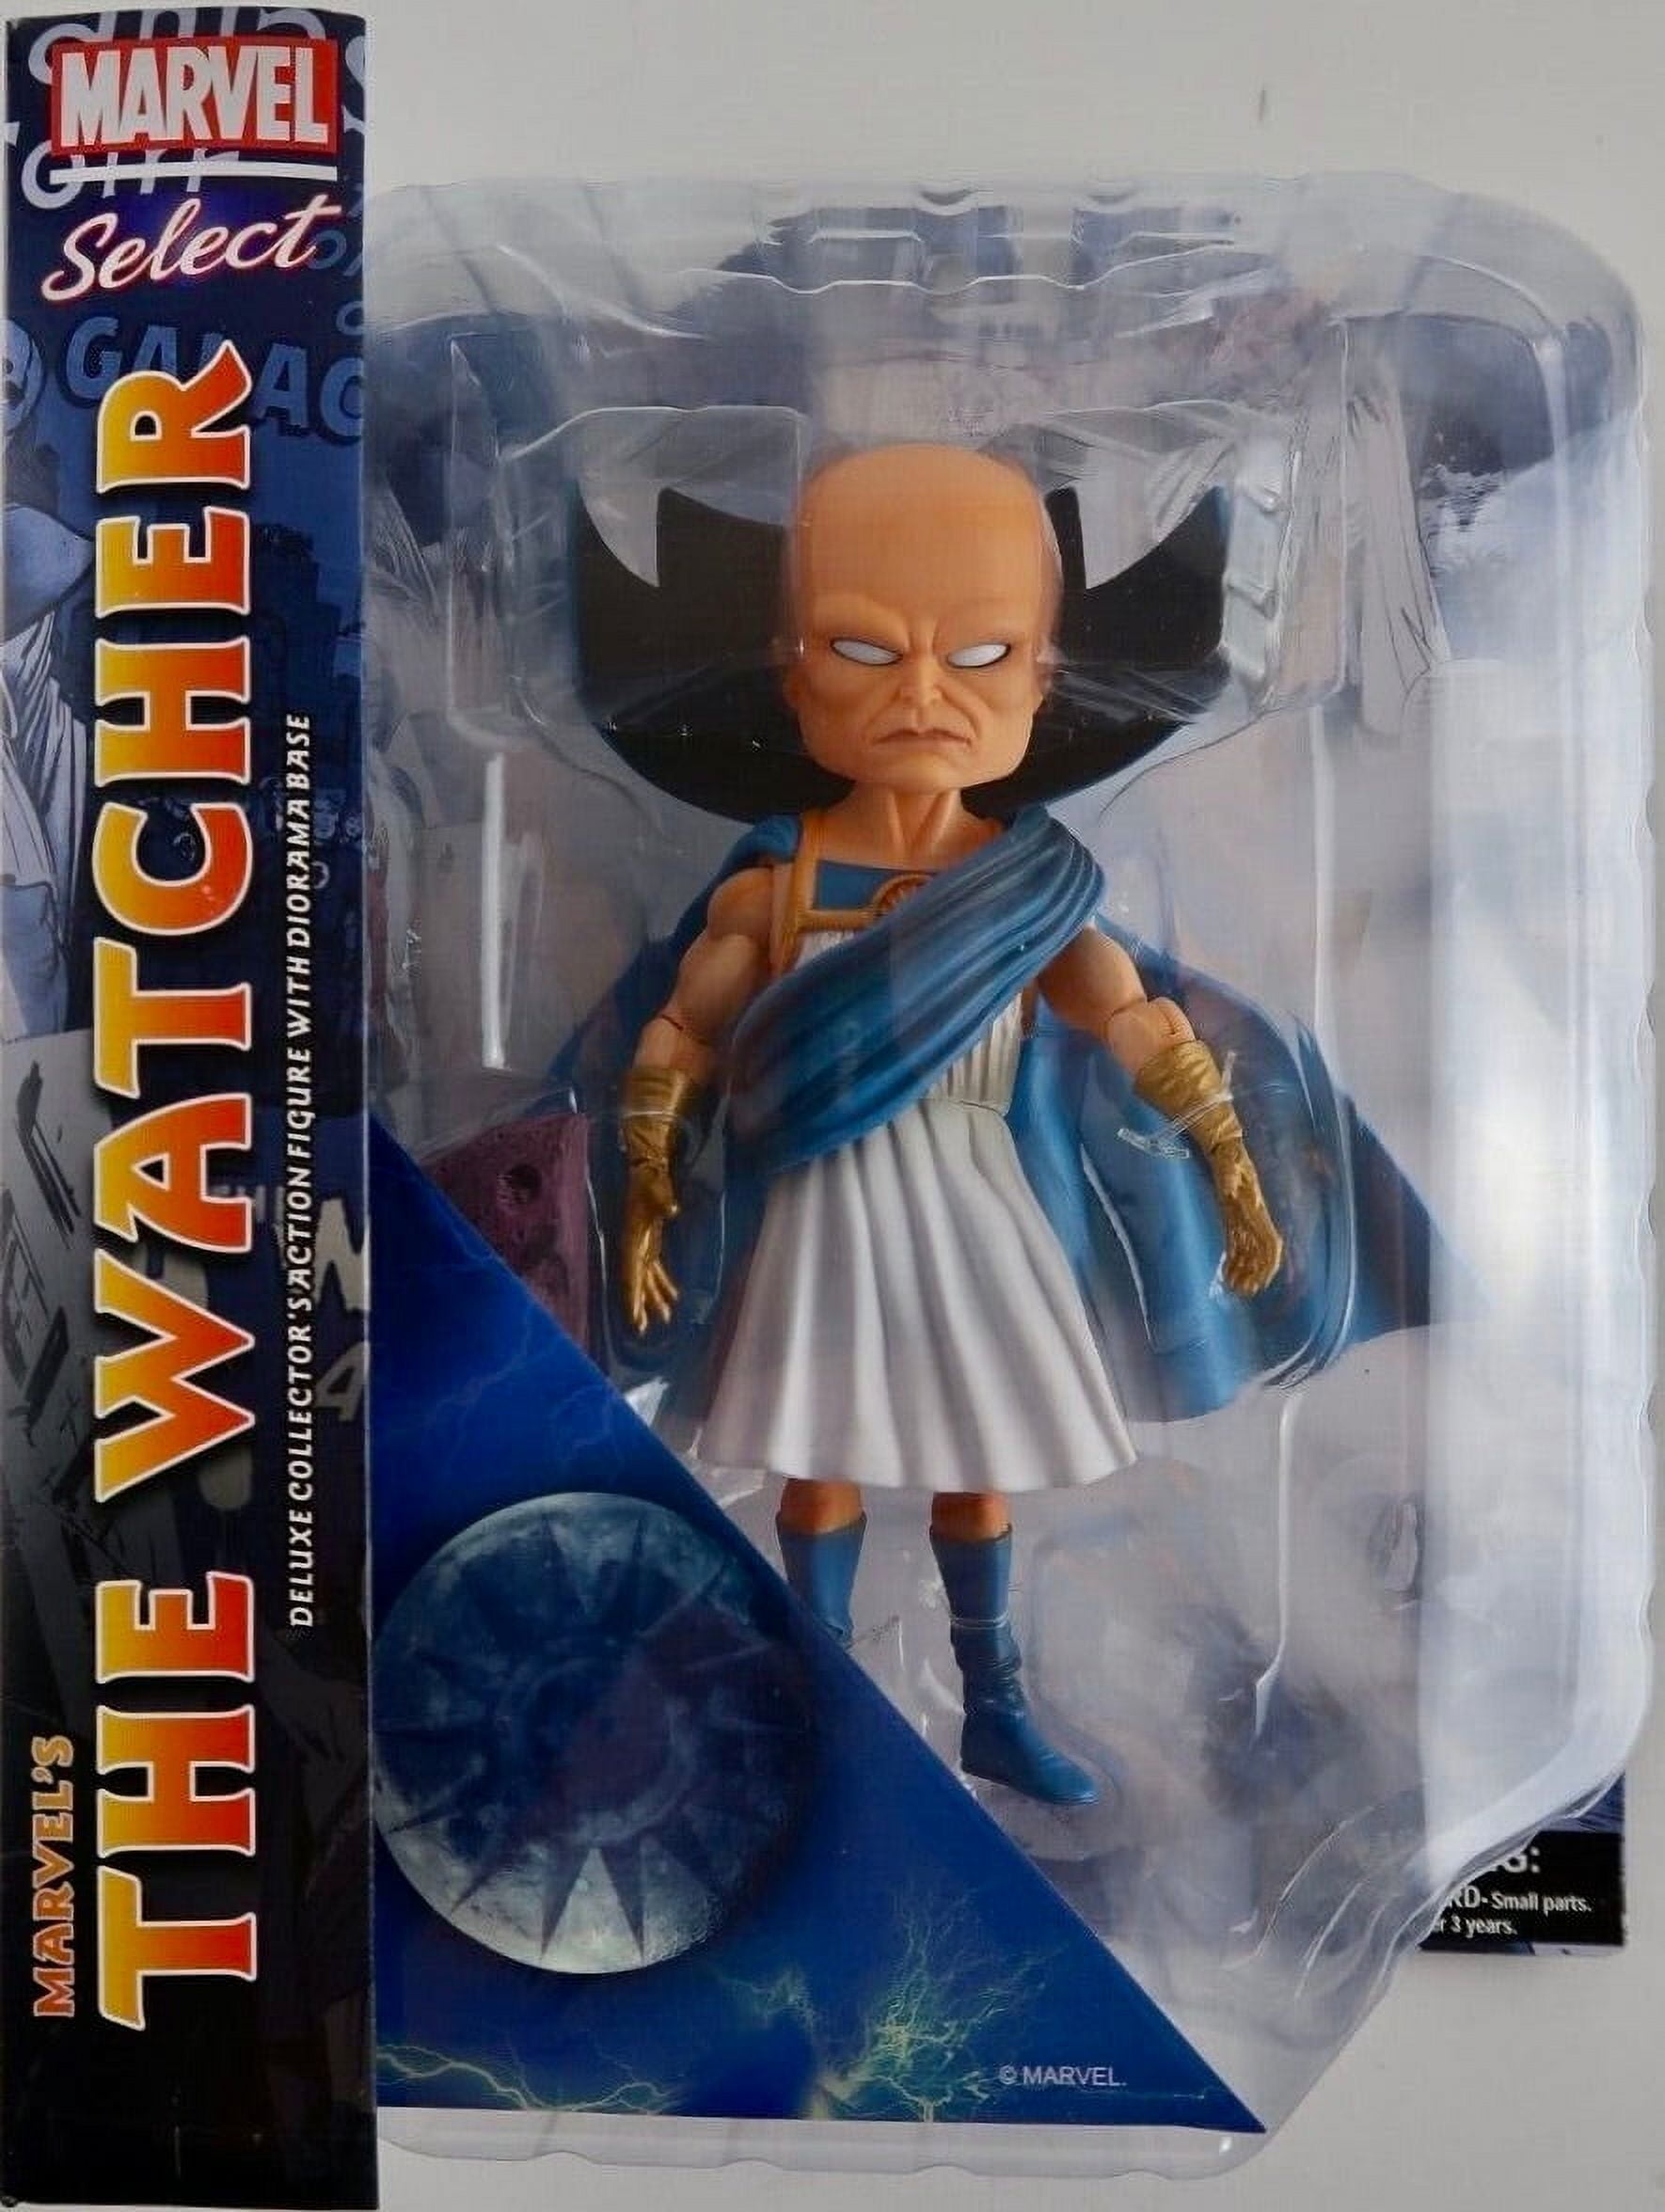 Marvel Select UATU THE WATCHER Reissue Diamond Select Toys Figure Review 